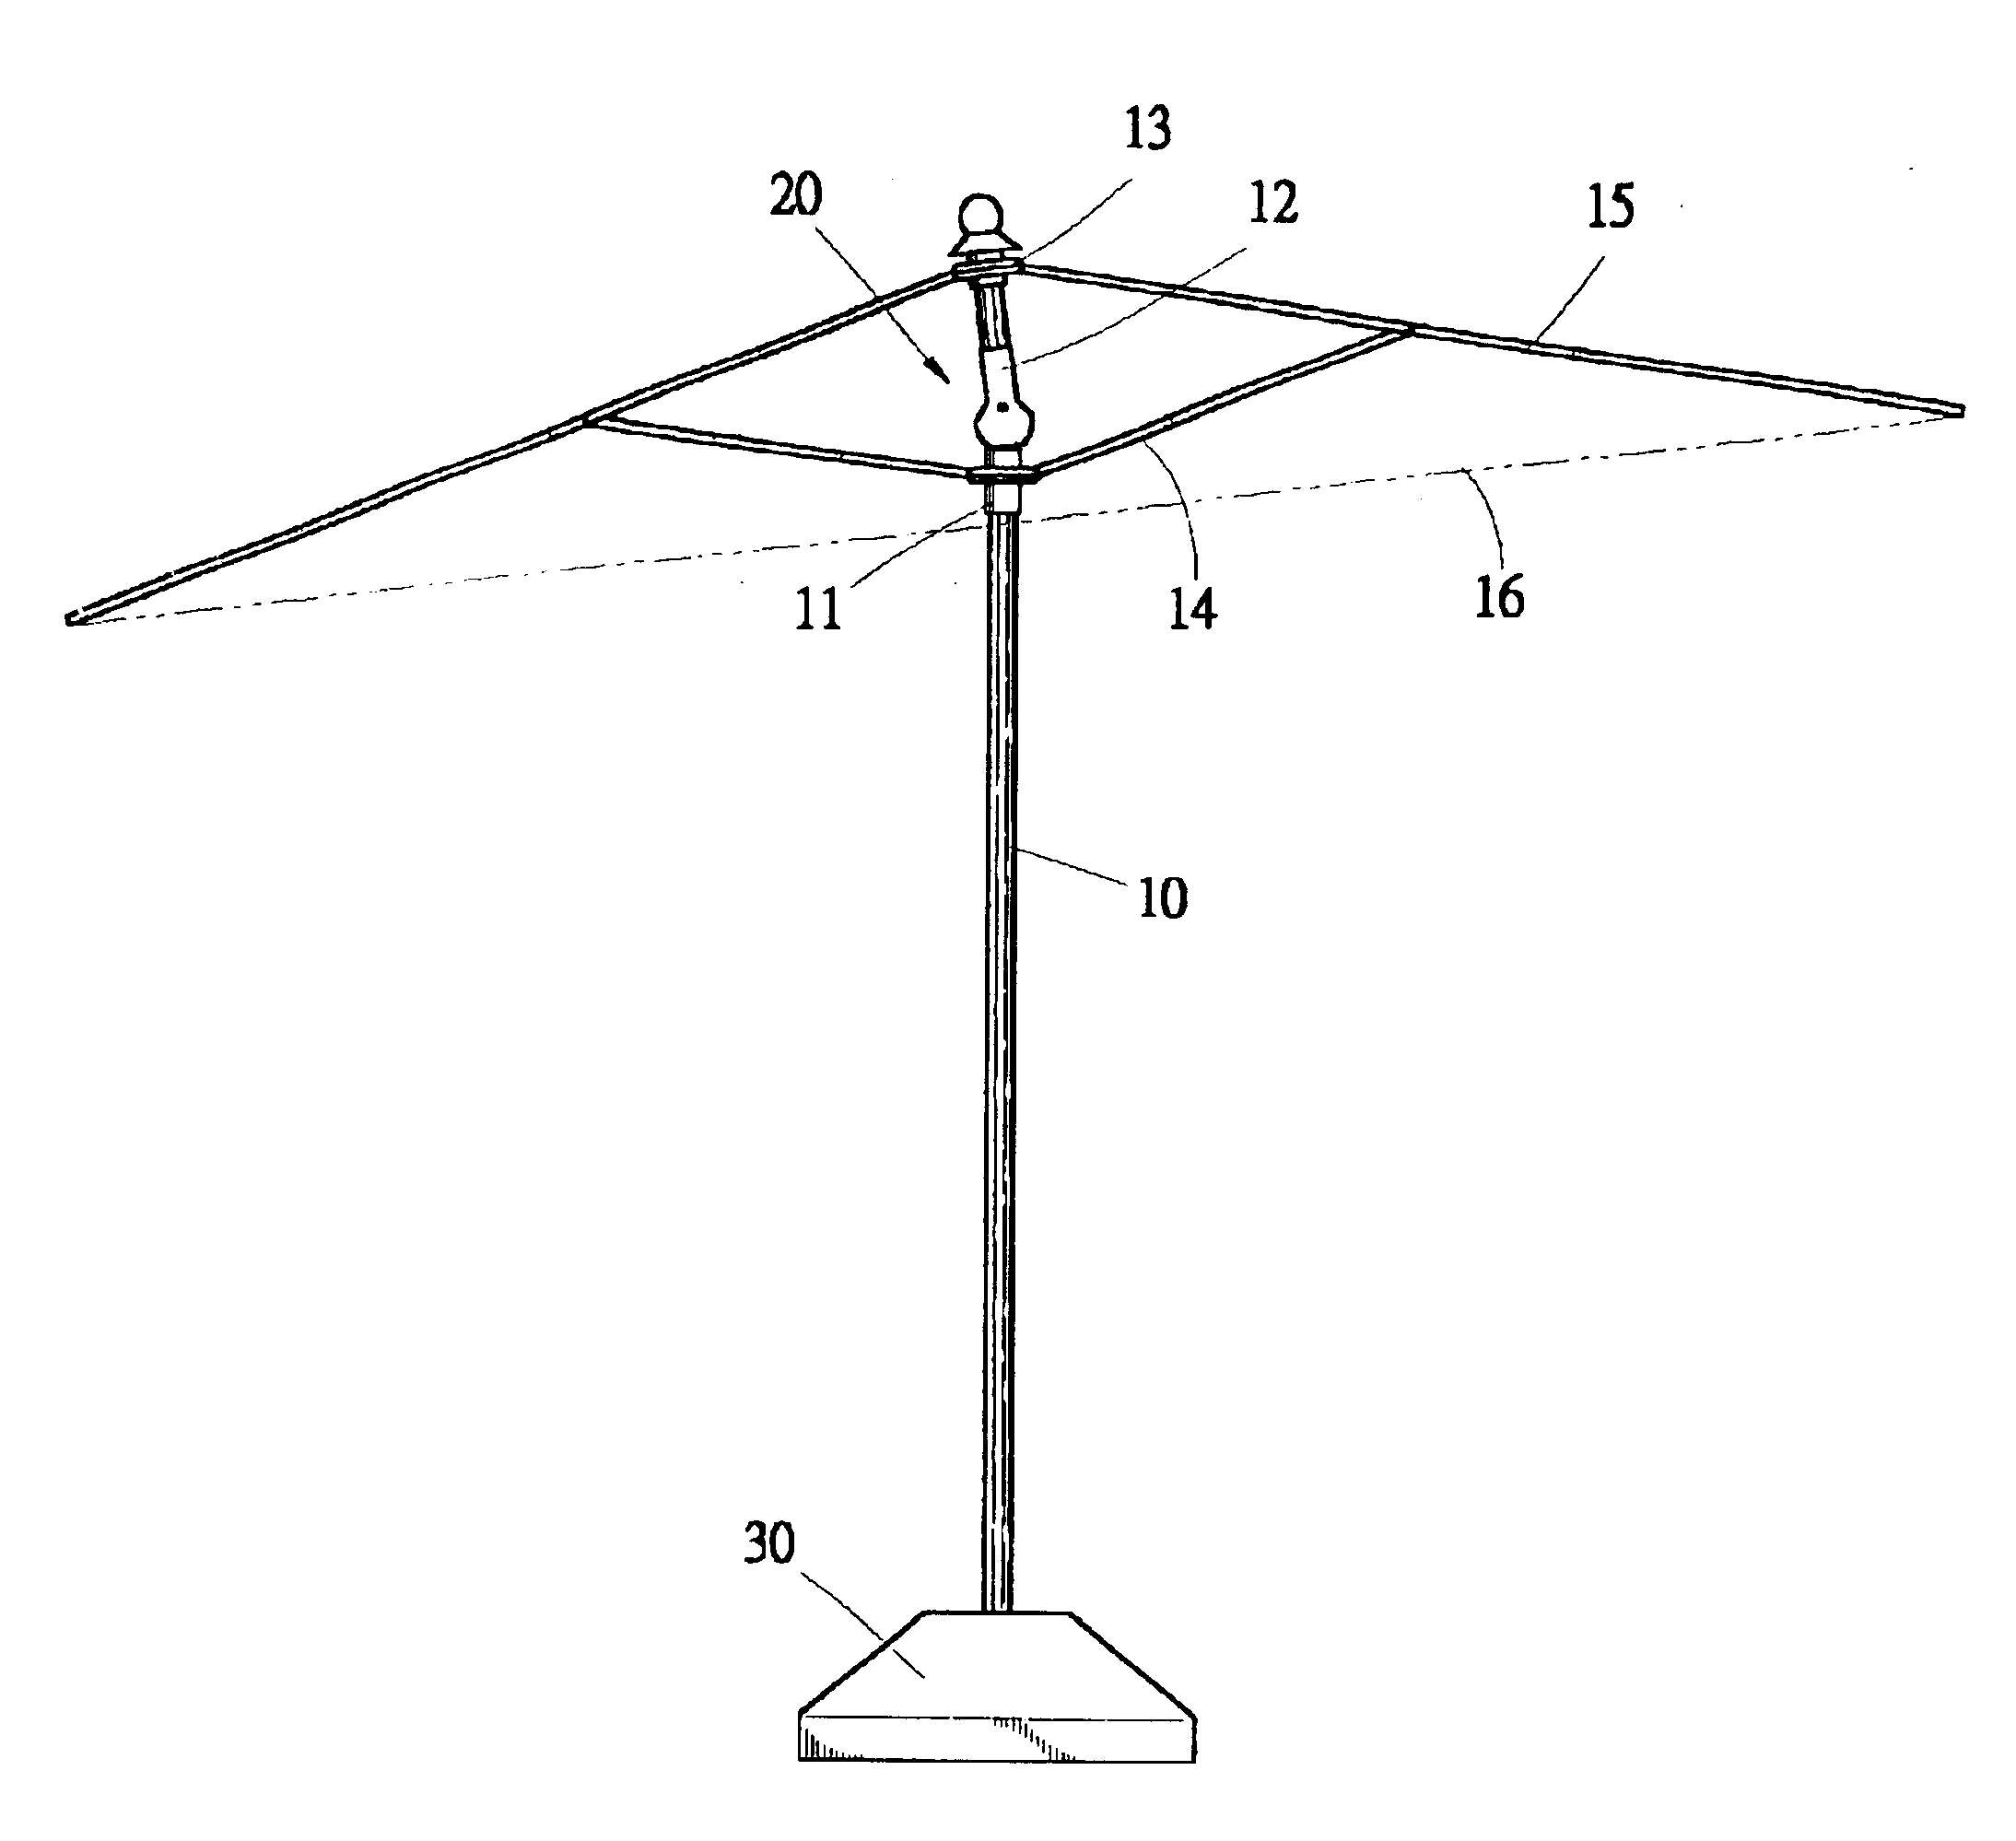 Umbrella canopy orientating device